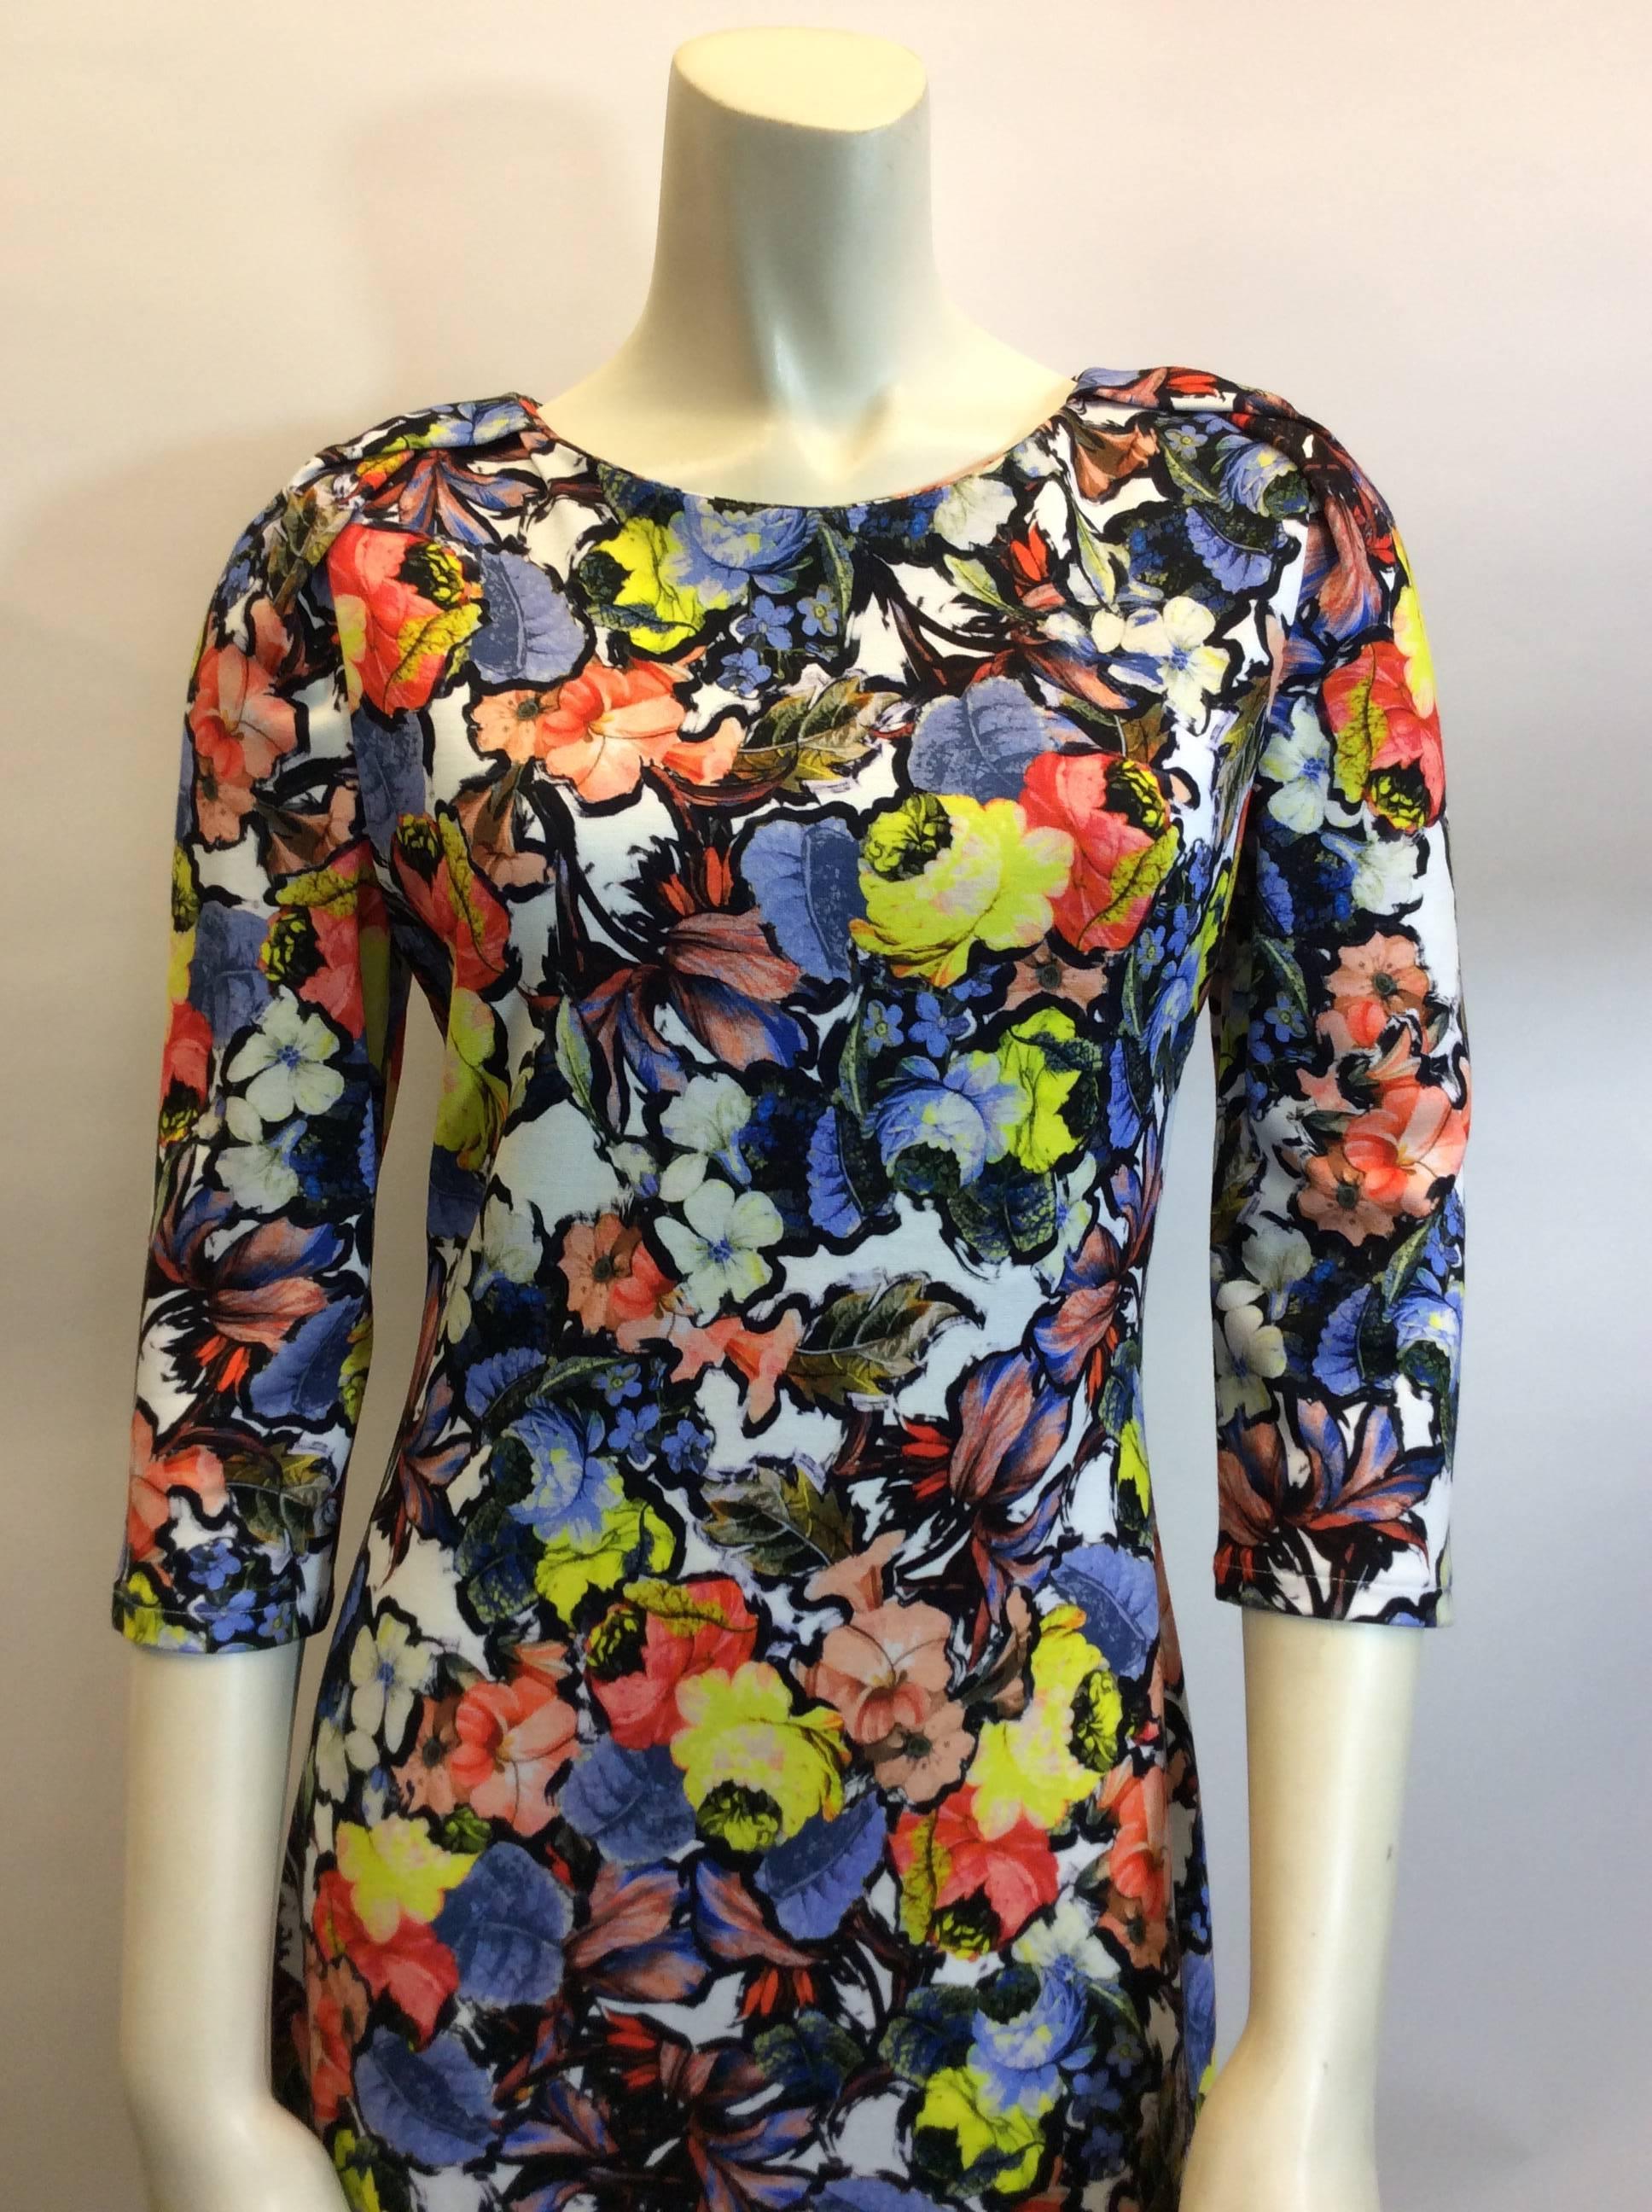 Erdem NWT Floral Wilhelmina Jersey Dress 
Size 10
Jersey fabric (viscose & elastane)
Original price: $840
Made in Portugal
